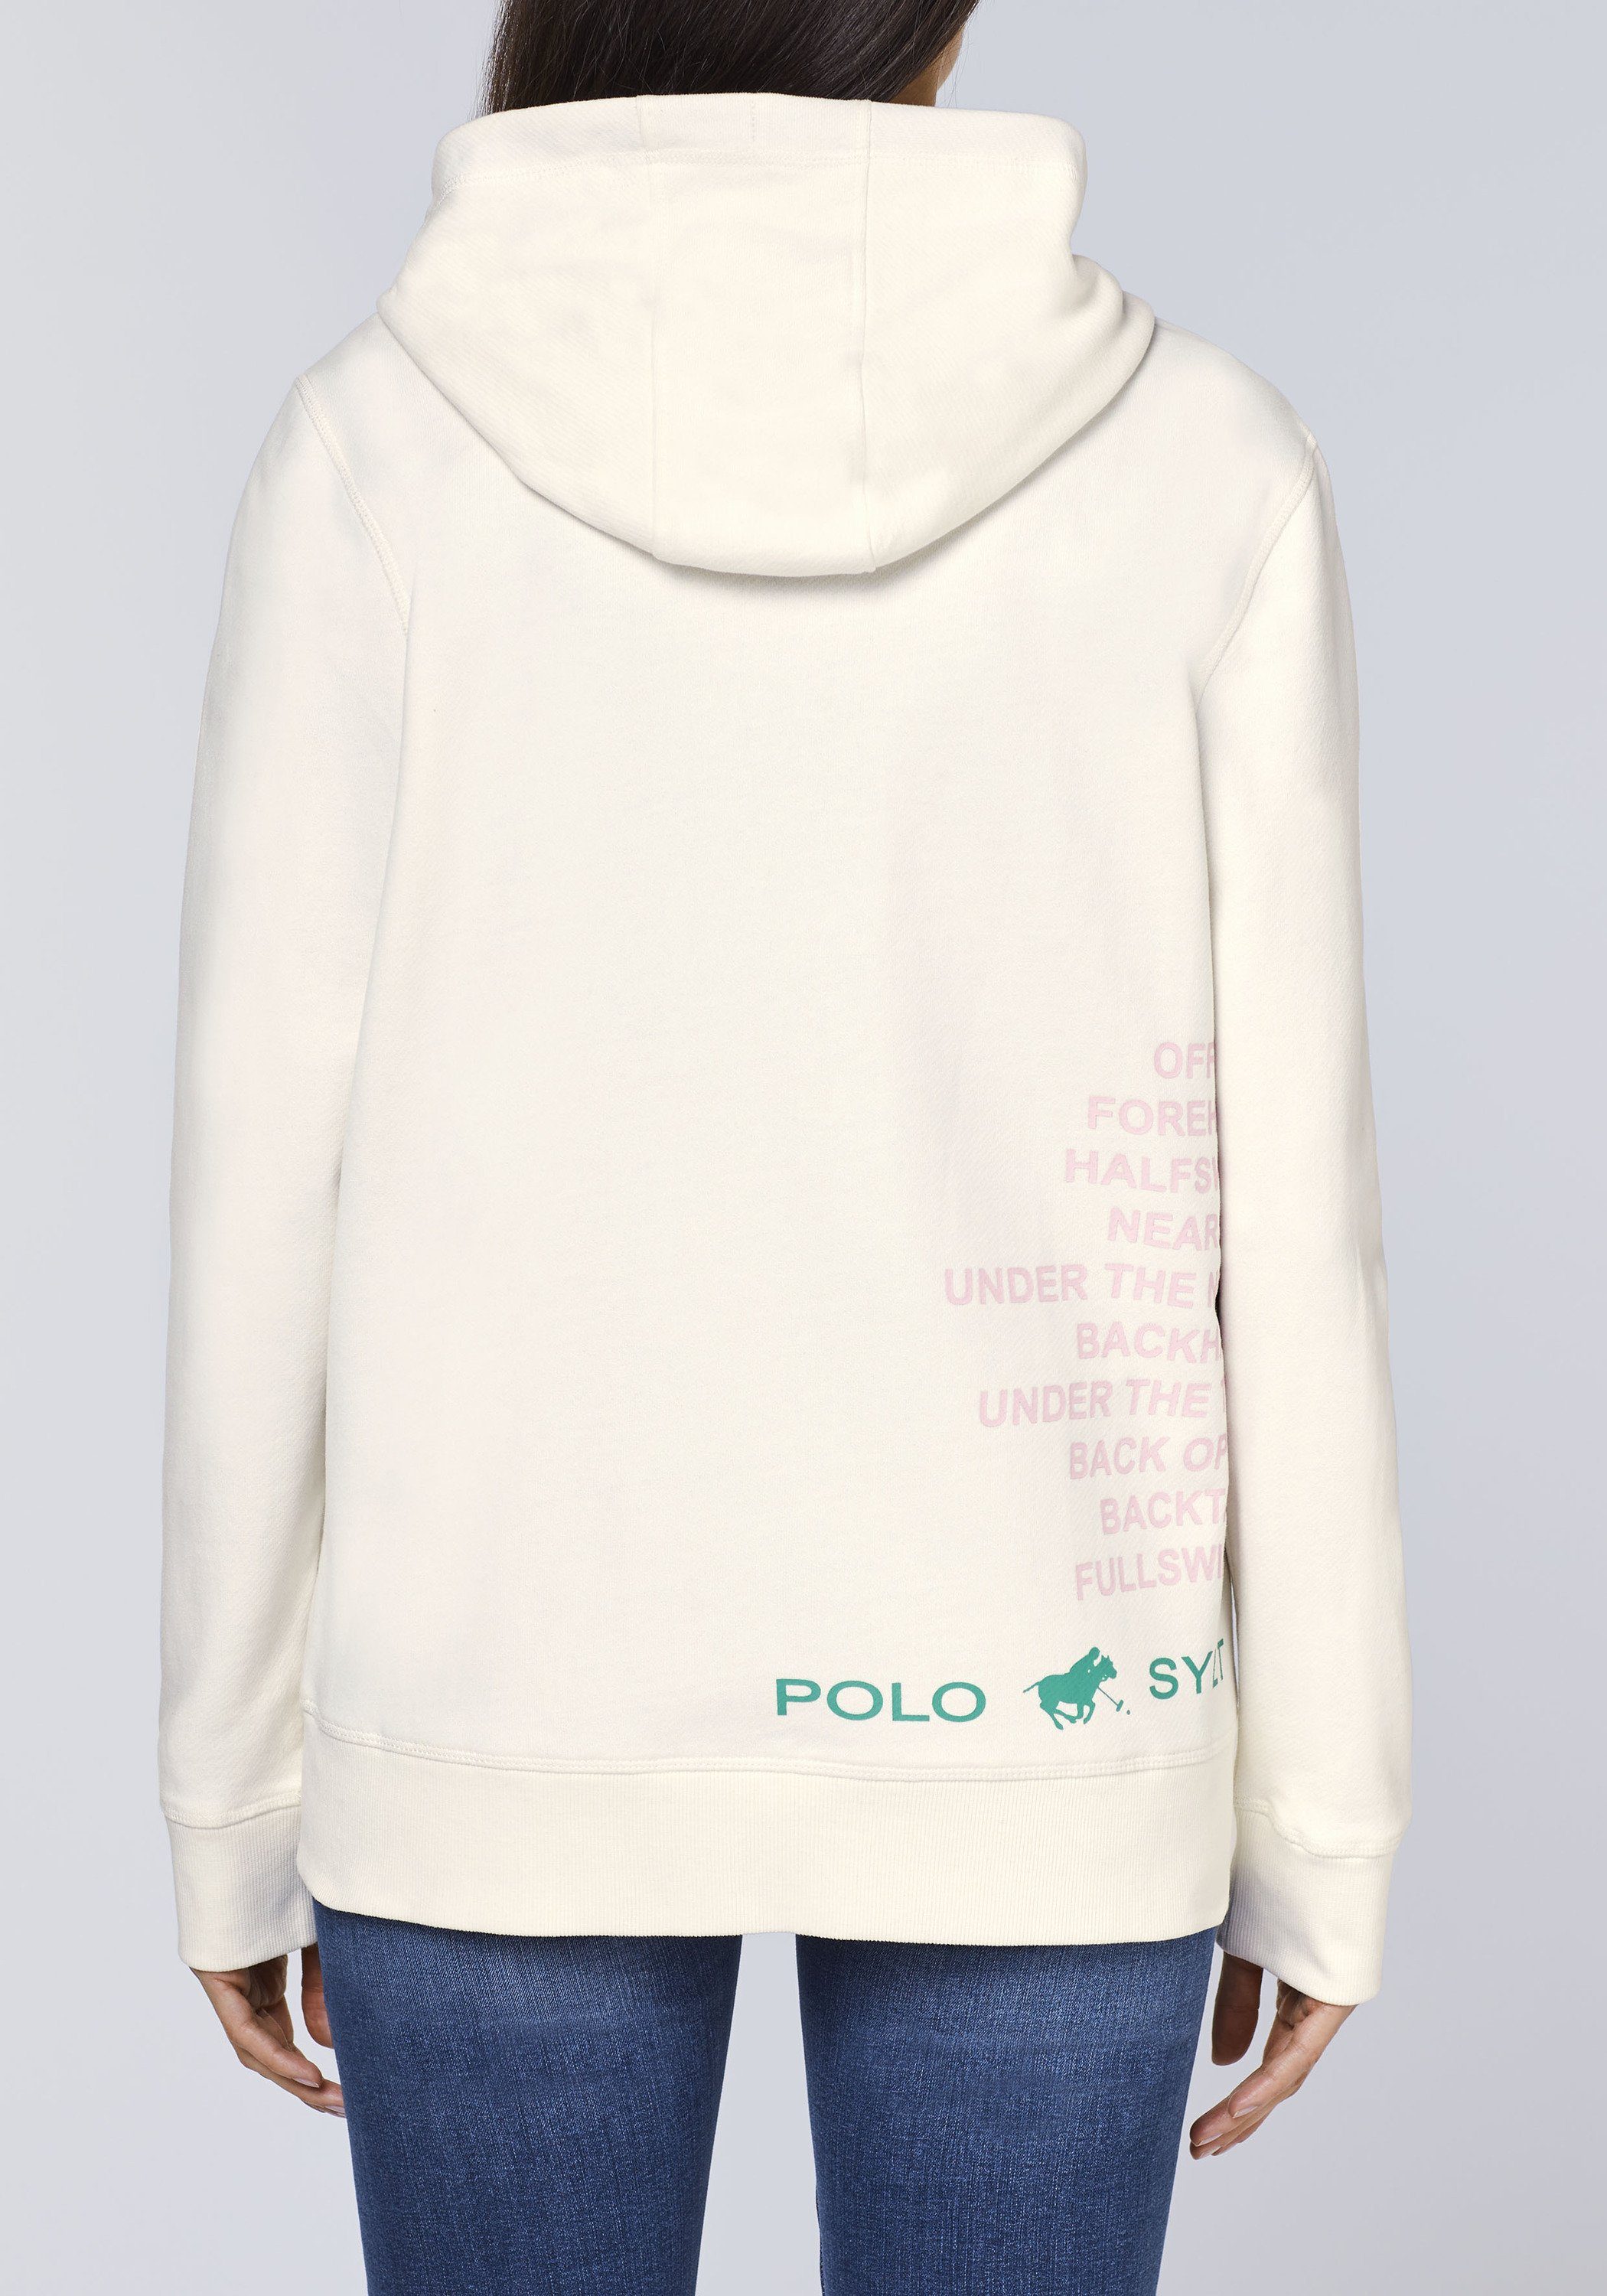 Polo Marshmallow Baumwollmischung softer Sweatjacke aus Sylt 11-4300